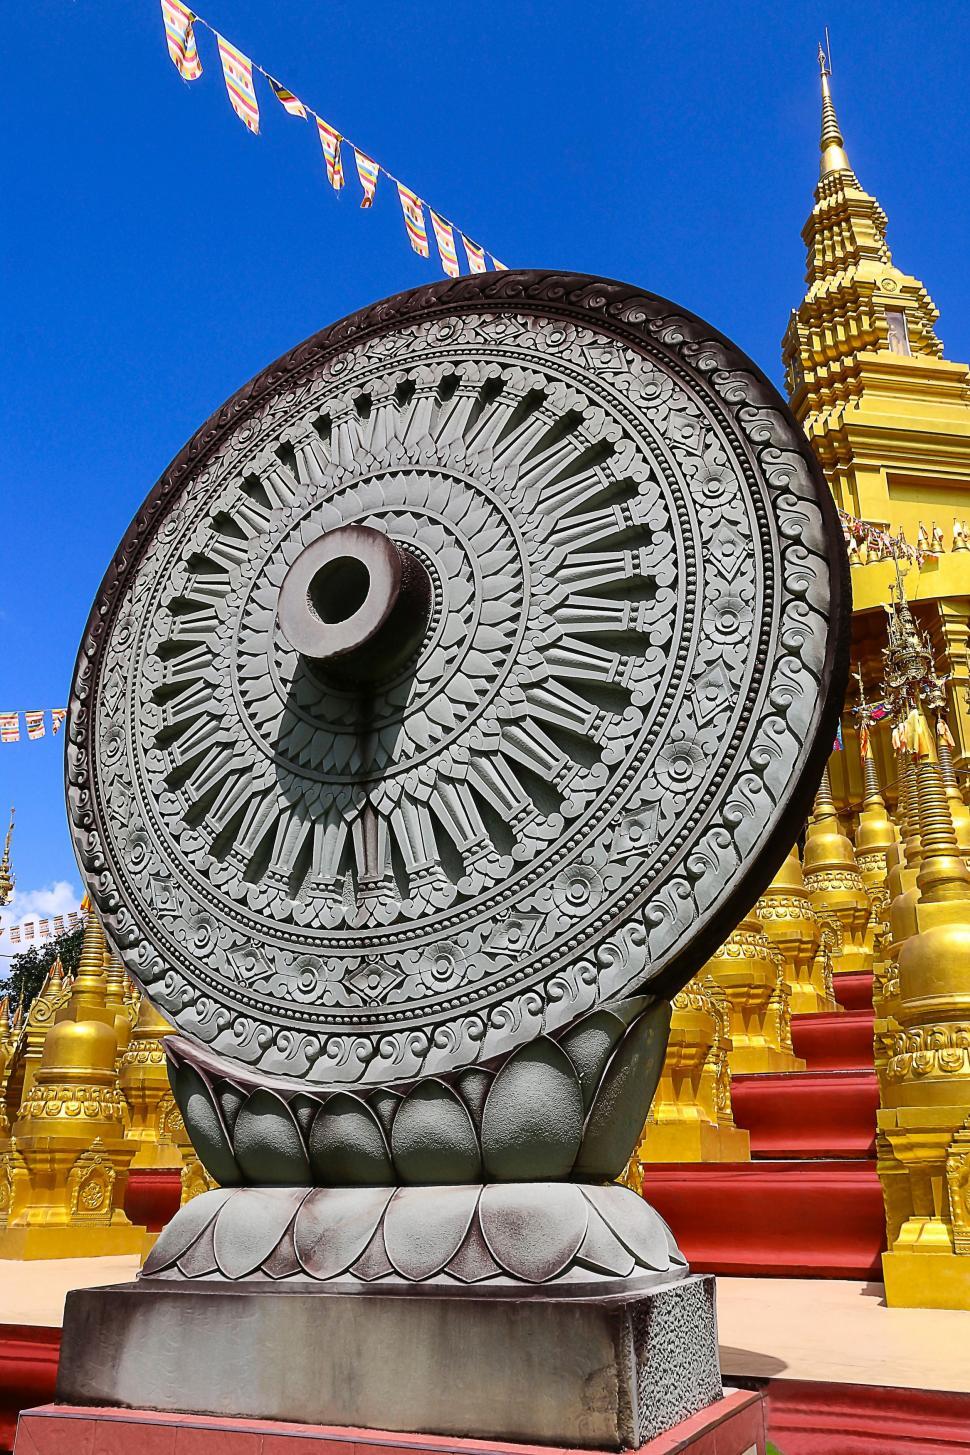 Free Image of Wheel of Dhamma 